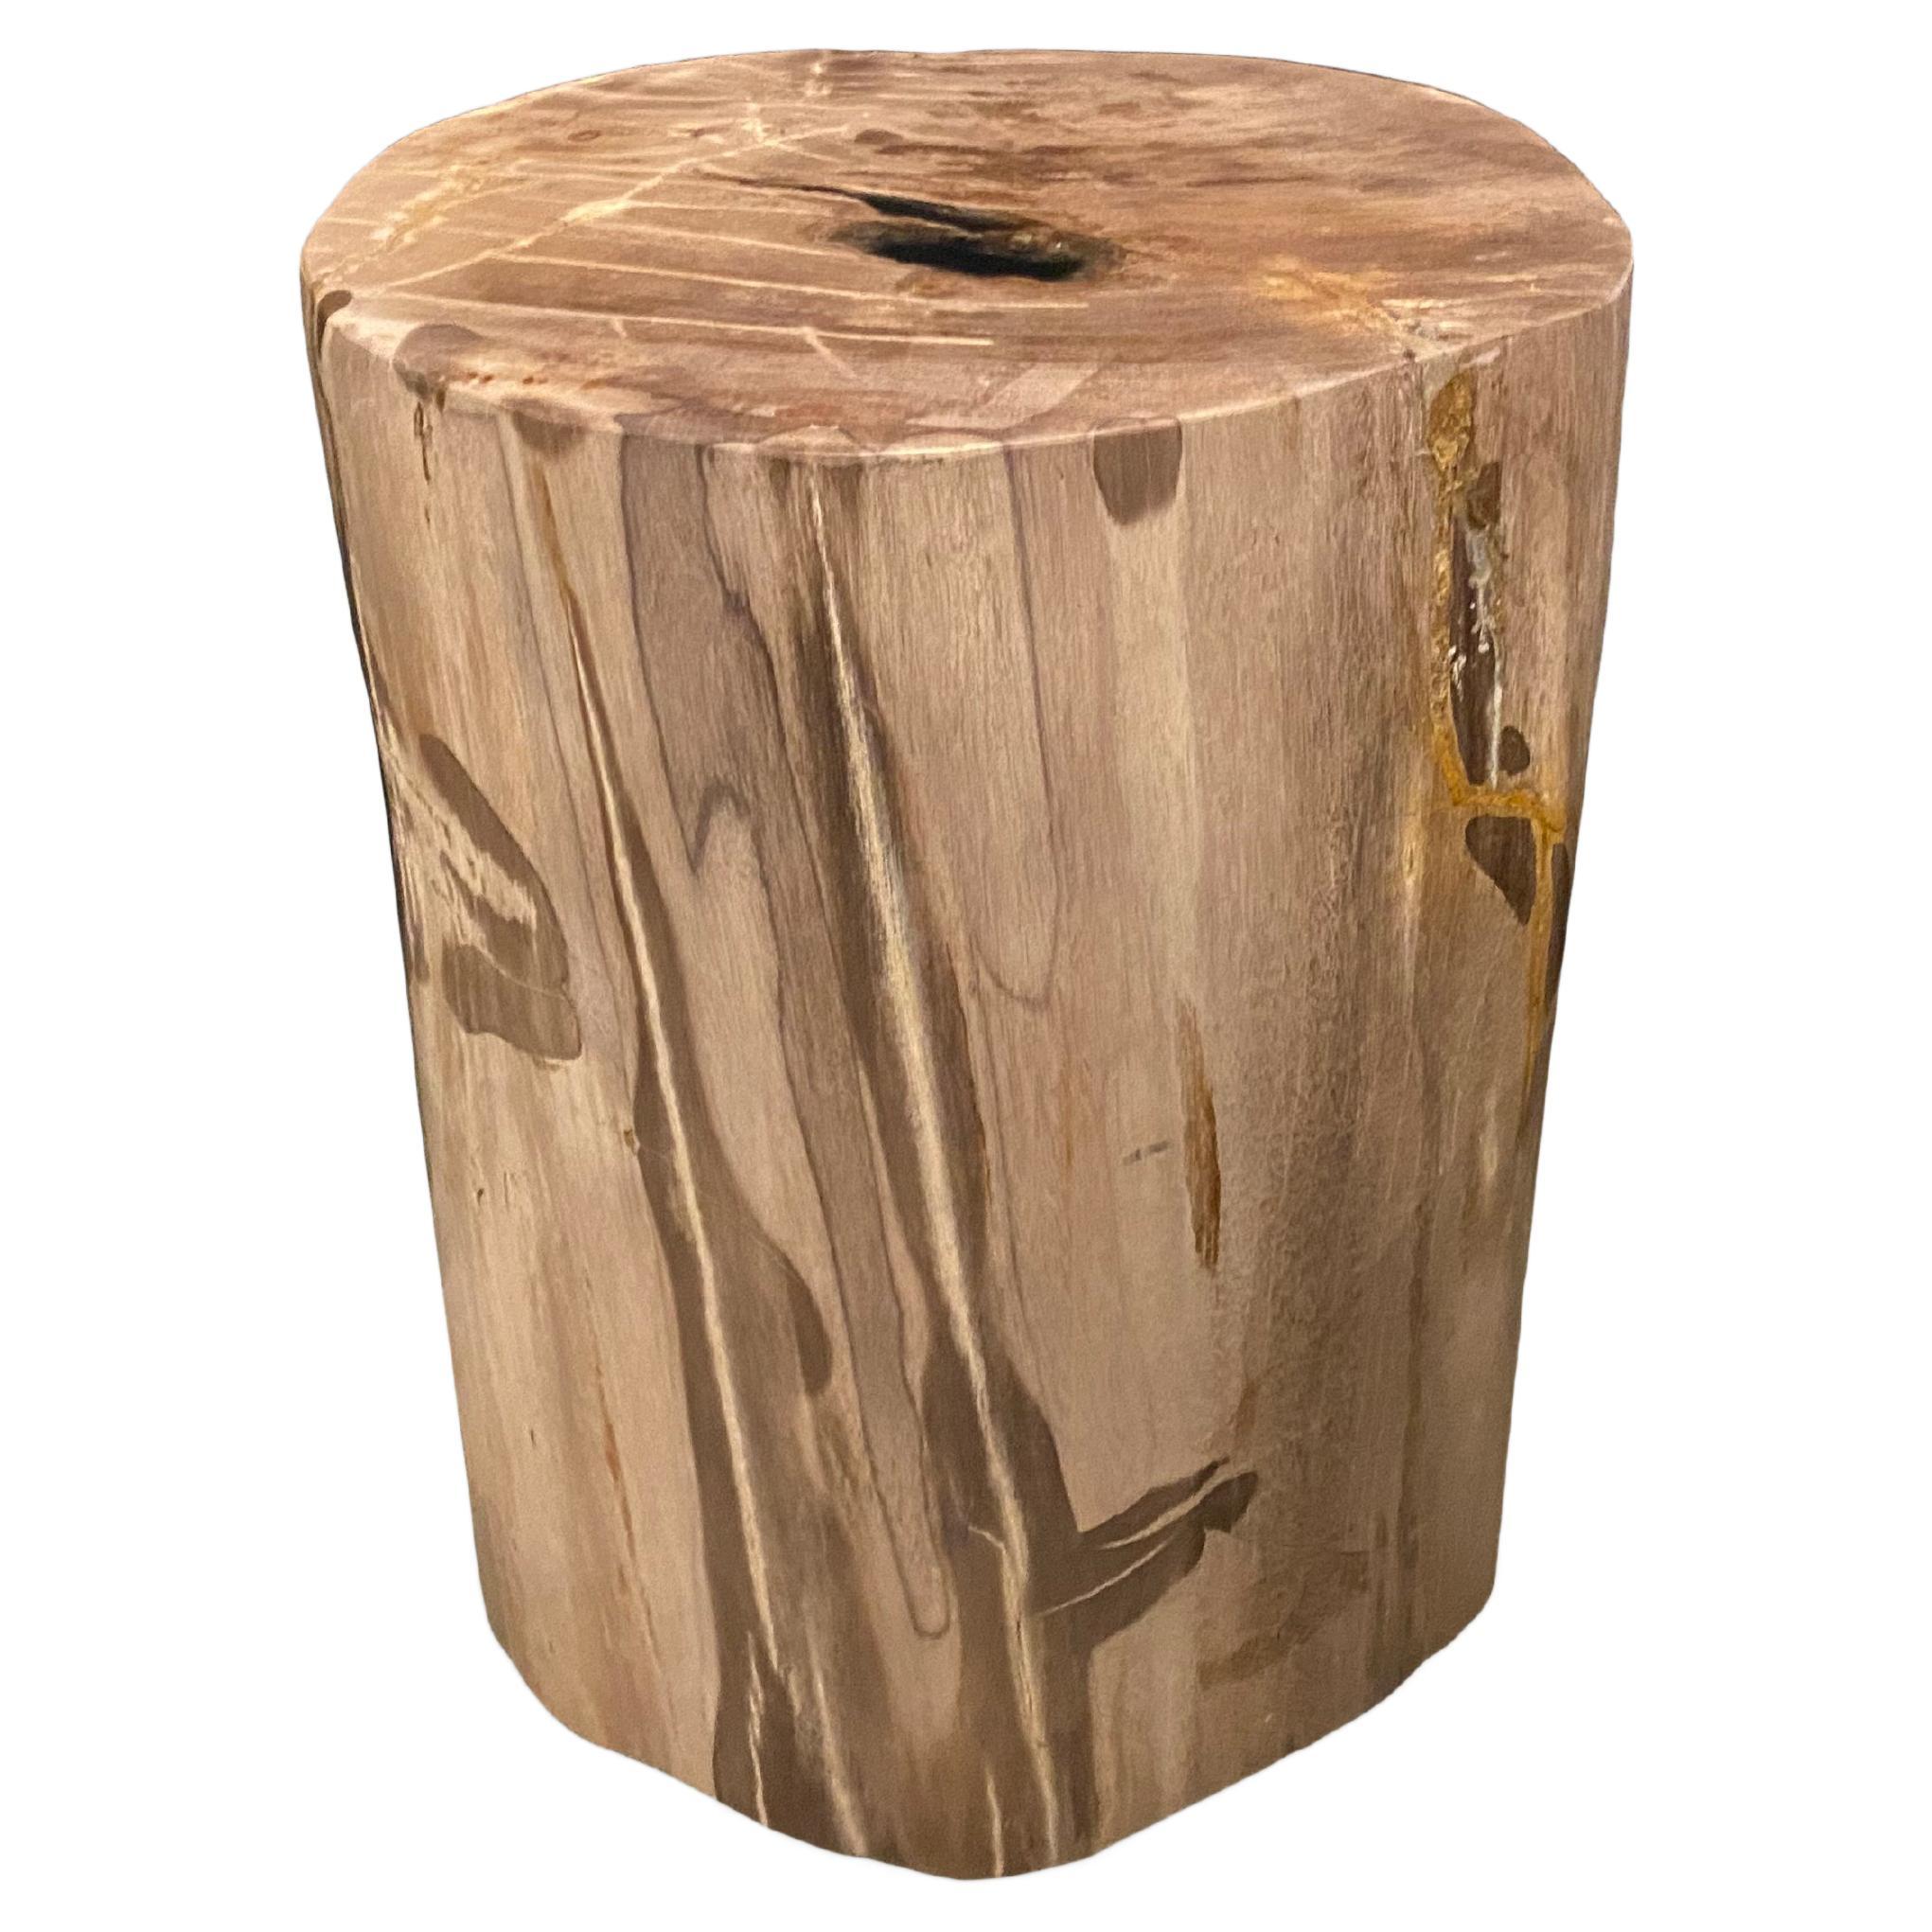 This wood-log clock teak/walnut solid wood table clock silent